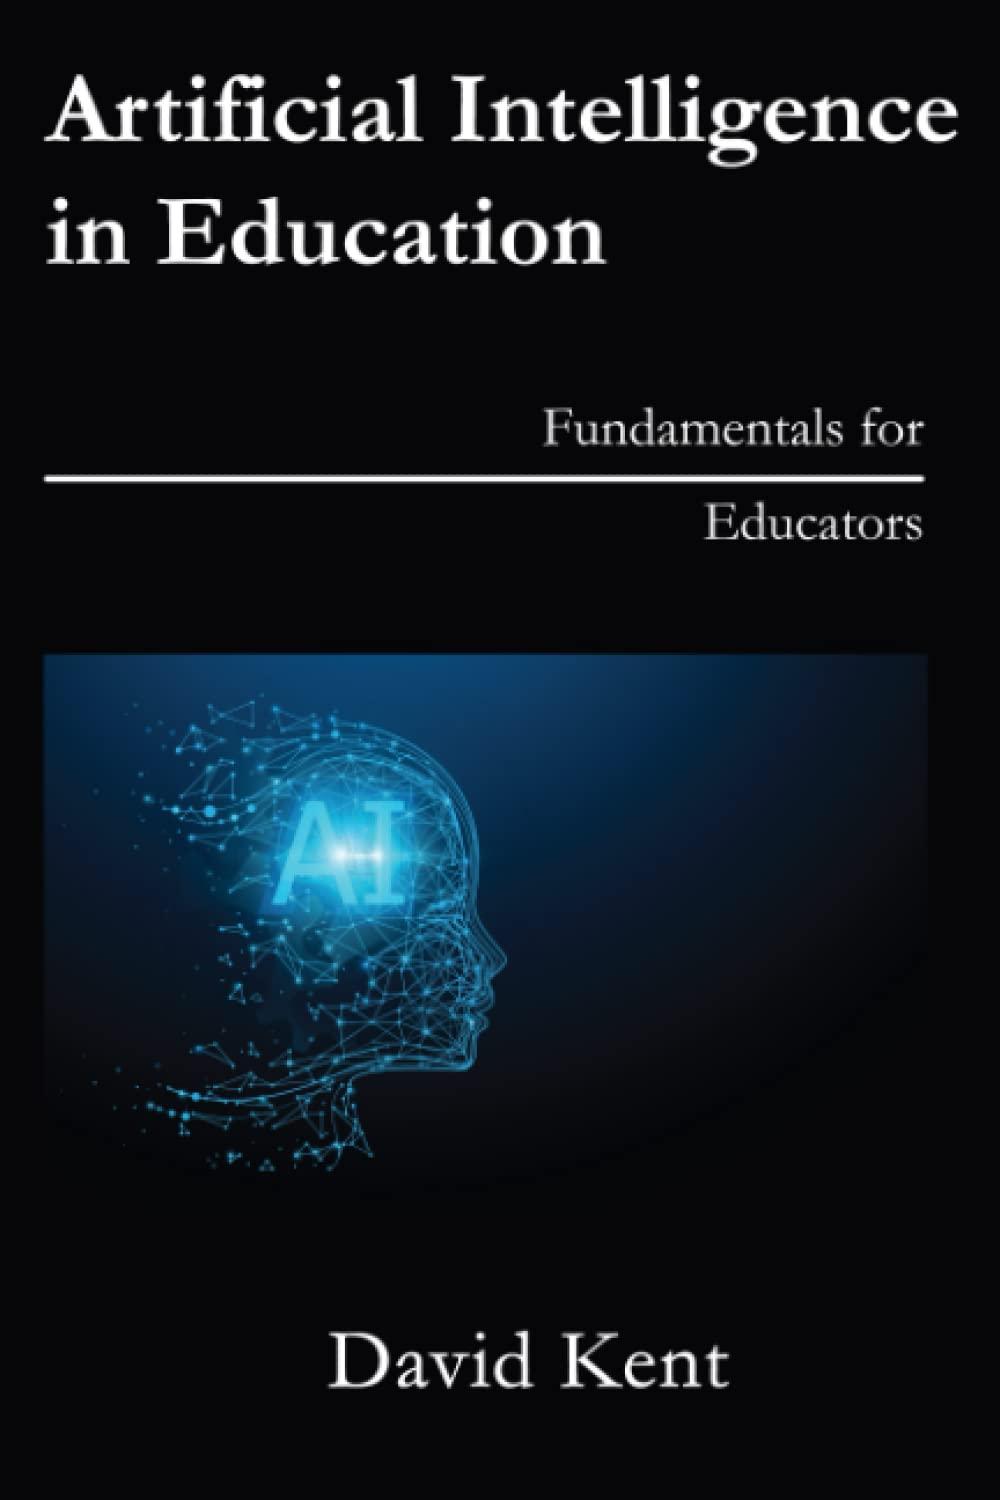 artificial intelligence in education fundamentals for educators 1st edition david kent b09skxznwd,